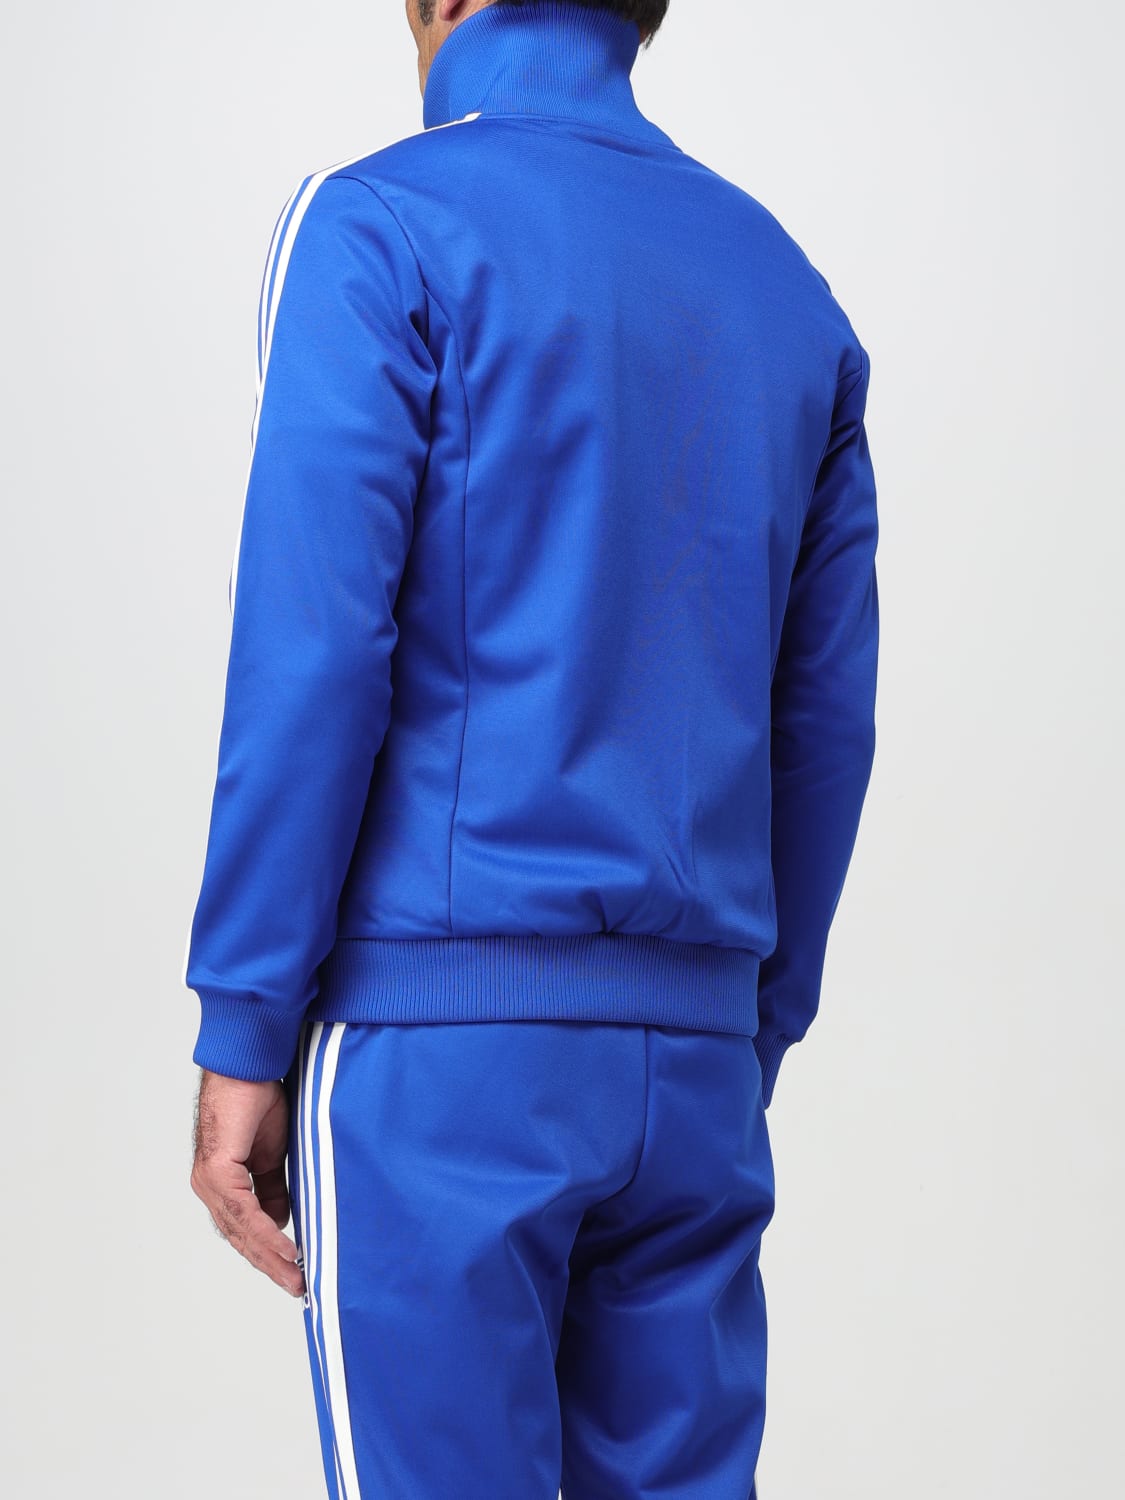 Gnawed at Originals ORIGINALS: Blue Adidas - for online | sweatshirt sweatshirt IU2122 man ADIDAS